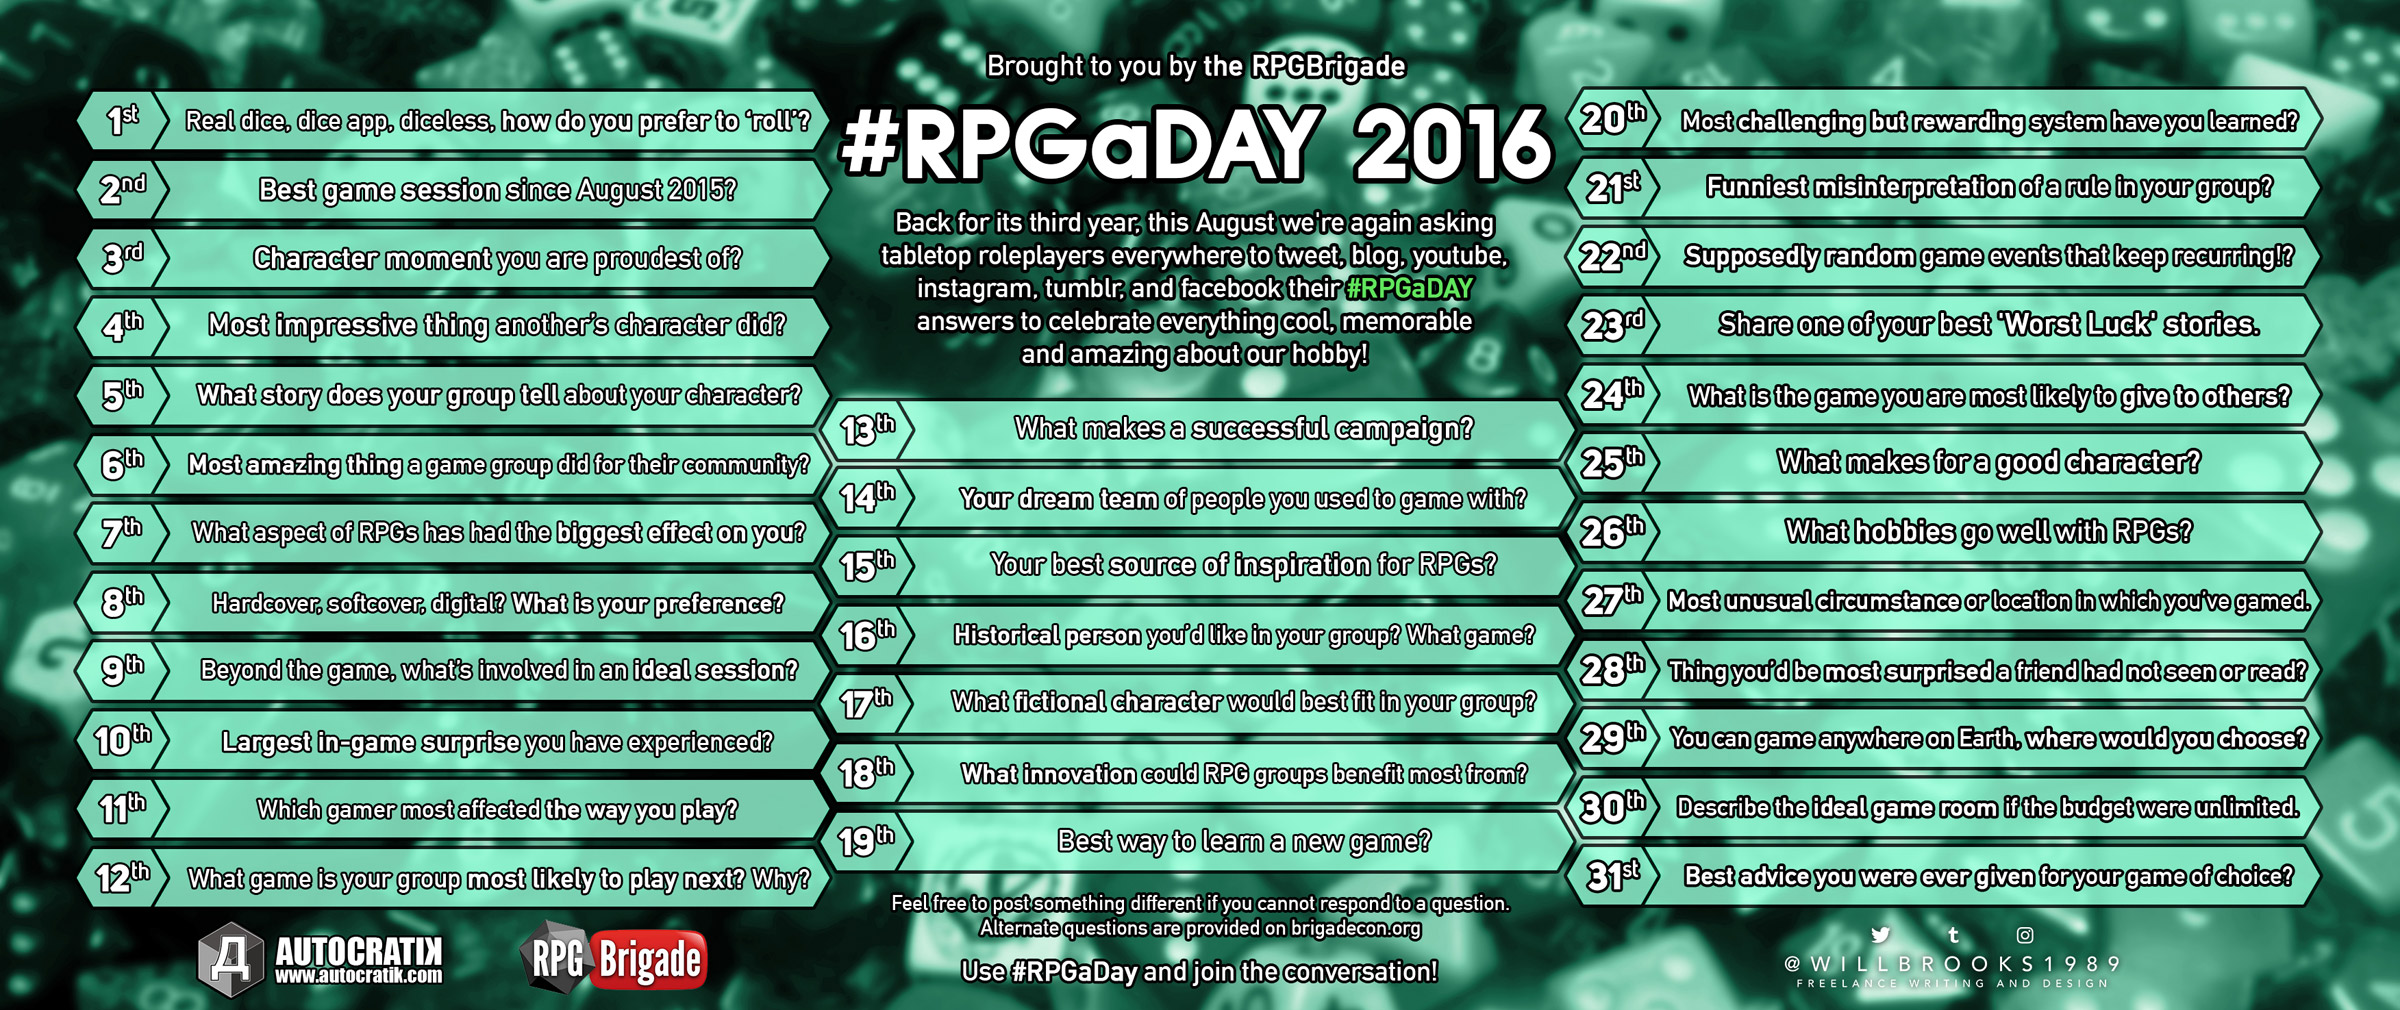 RPGaDay 2016